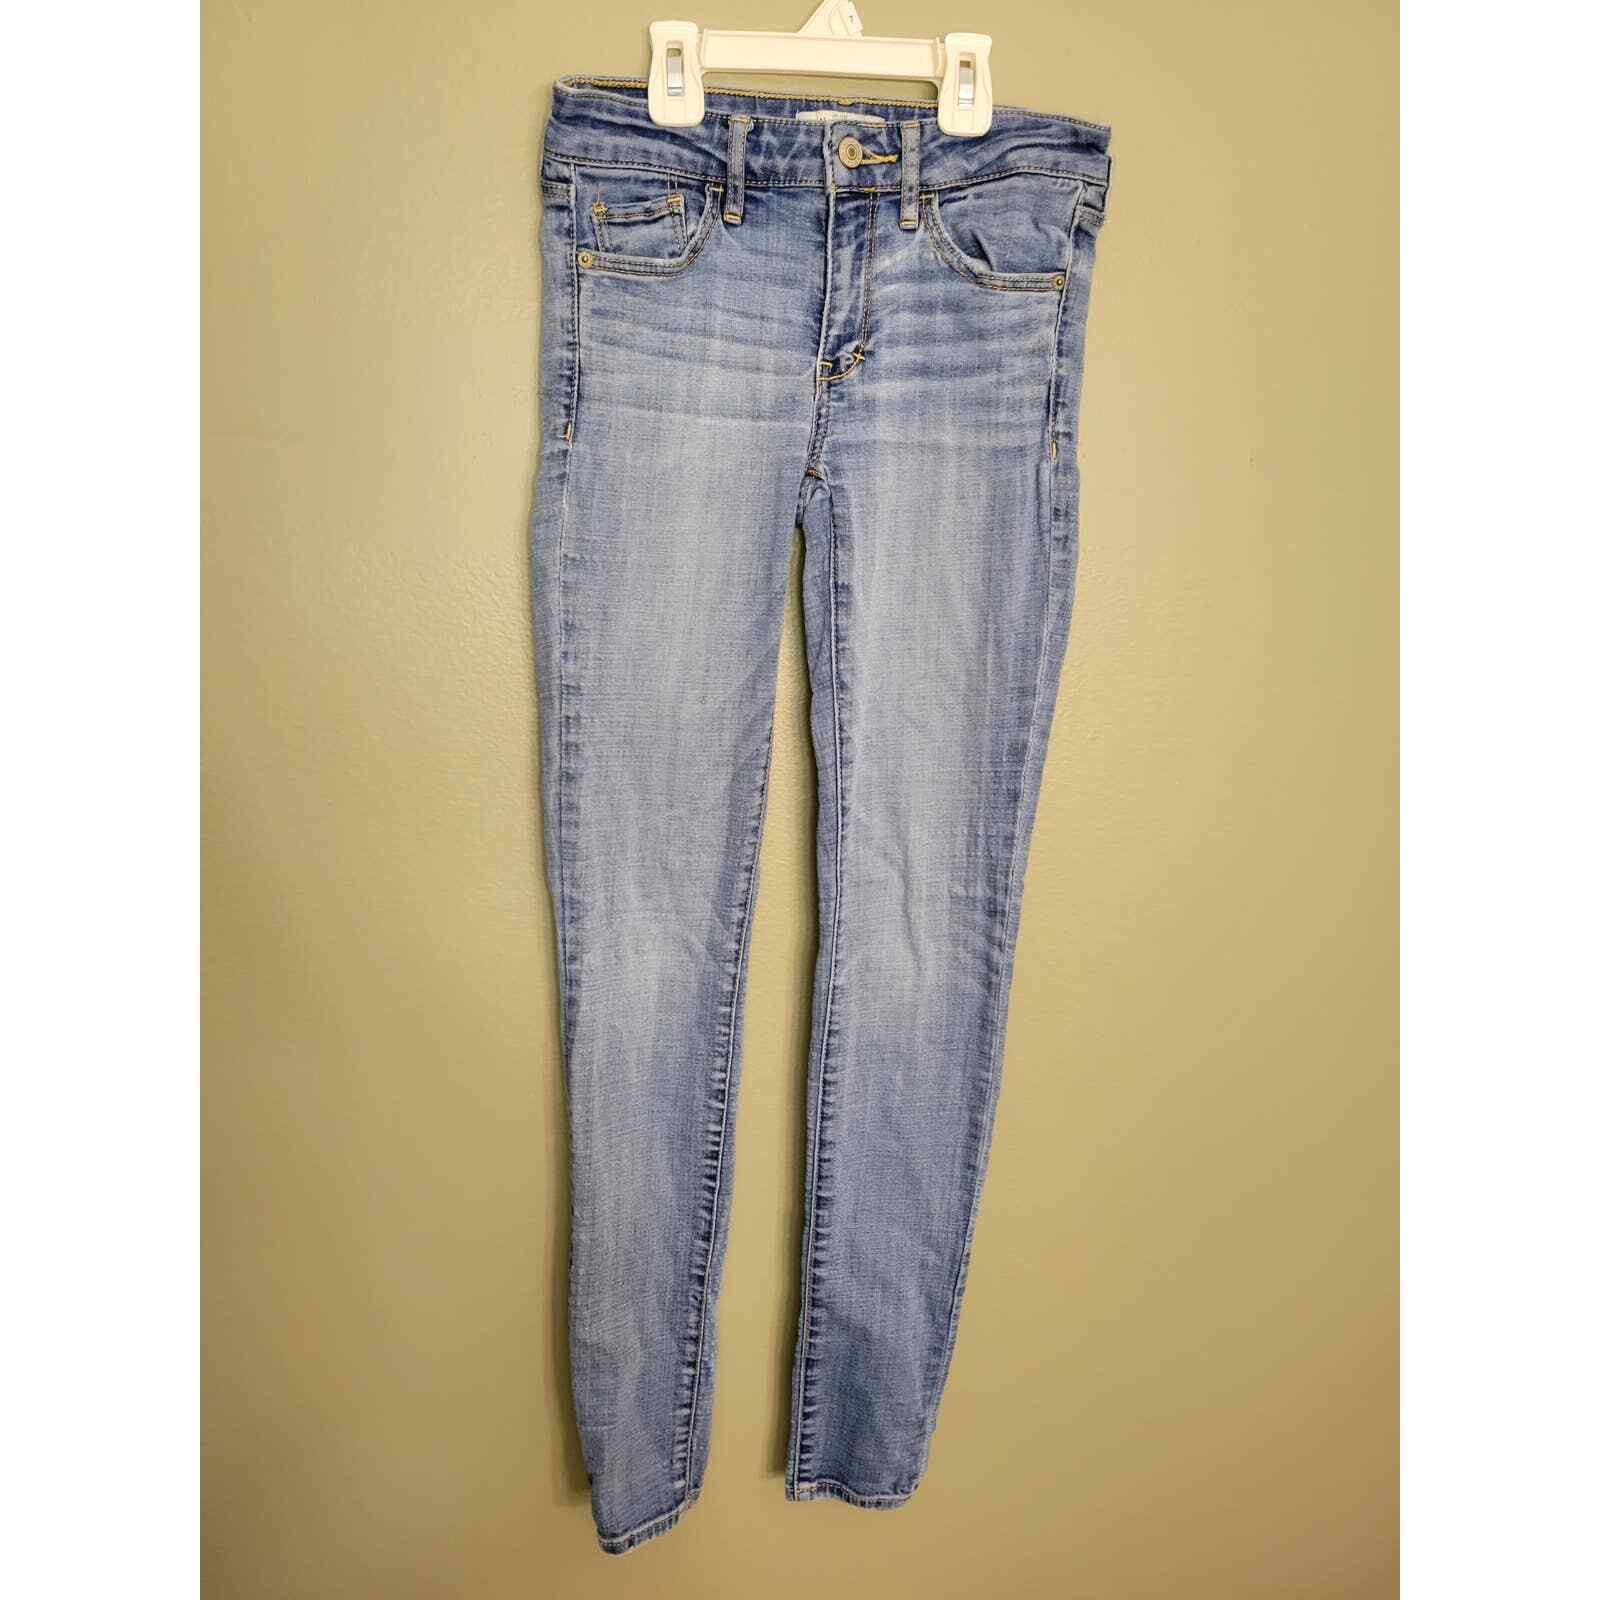 Women's/Juniors Abercrombie & Fitch Denim Skinny Jeans Size 0